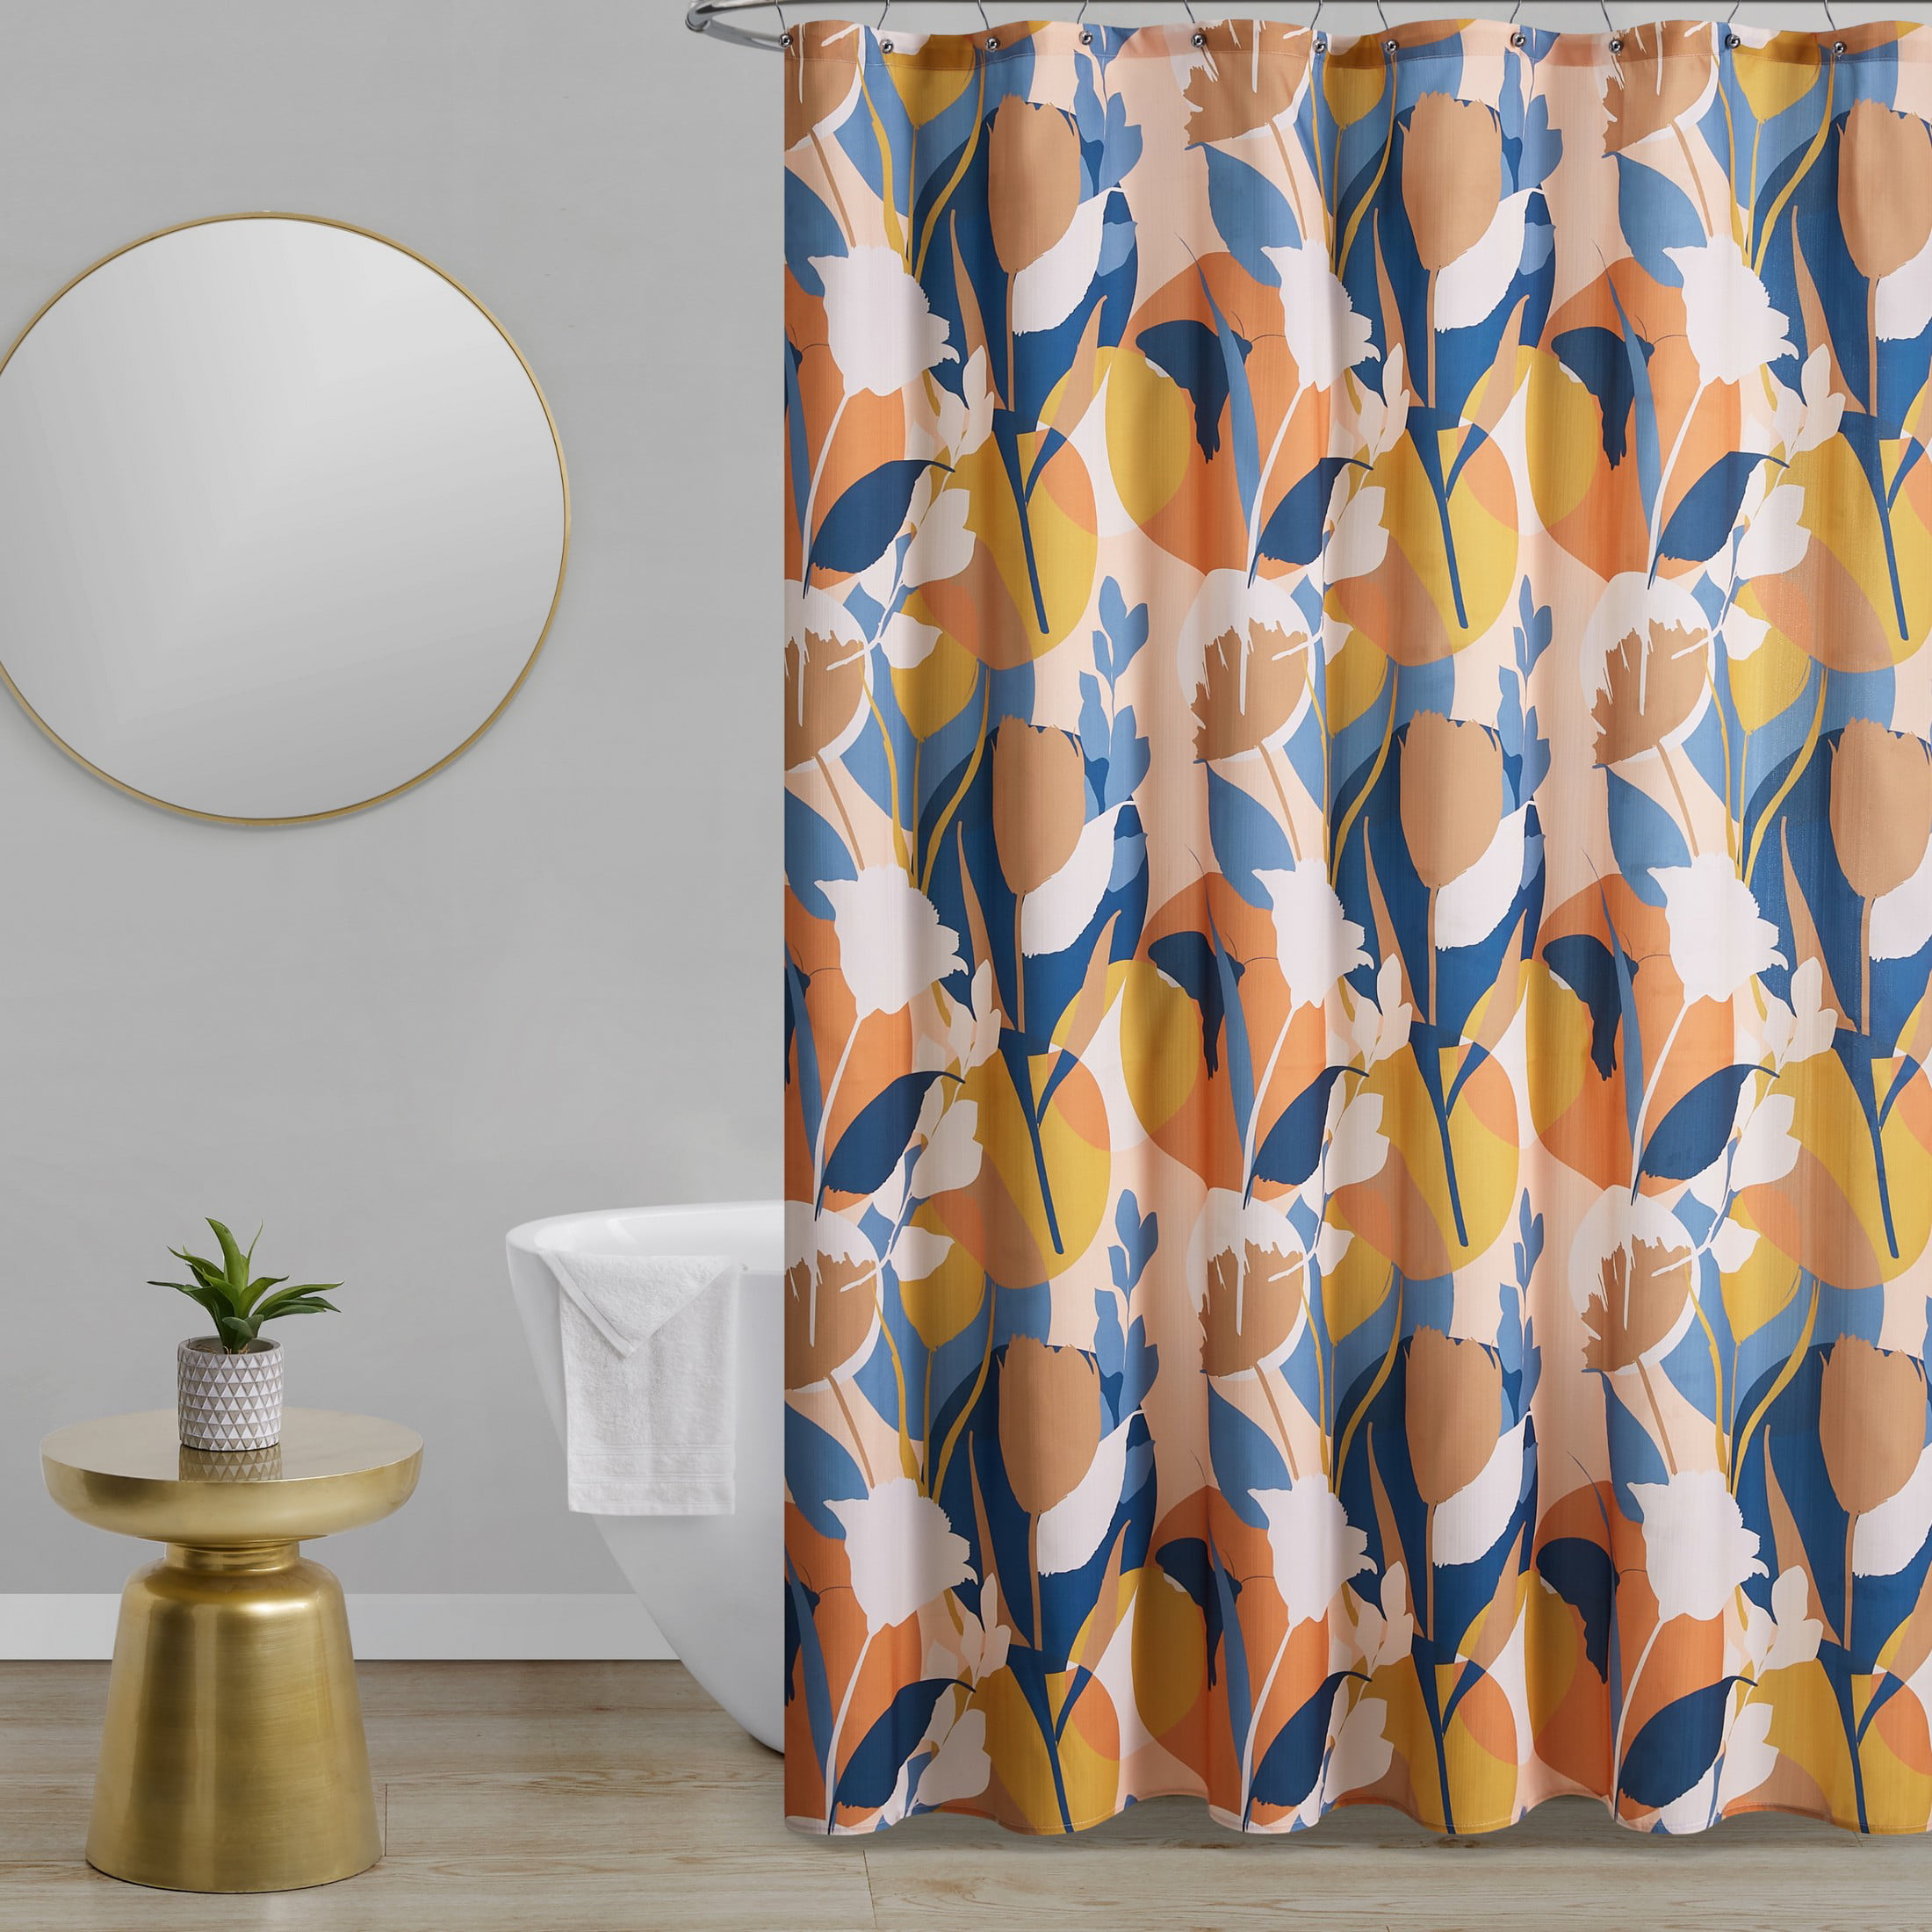 Rainbow Color 72X72" Waterproof Shower Fabric Curtain Set Bathroom Decor Hooks 